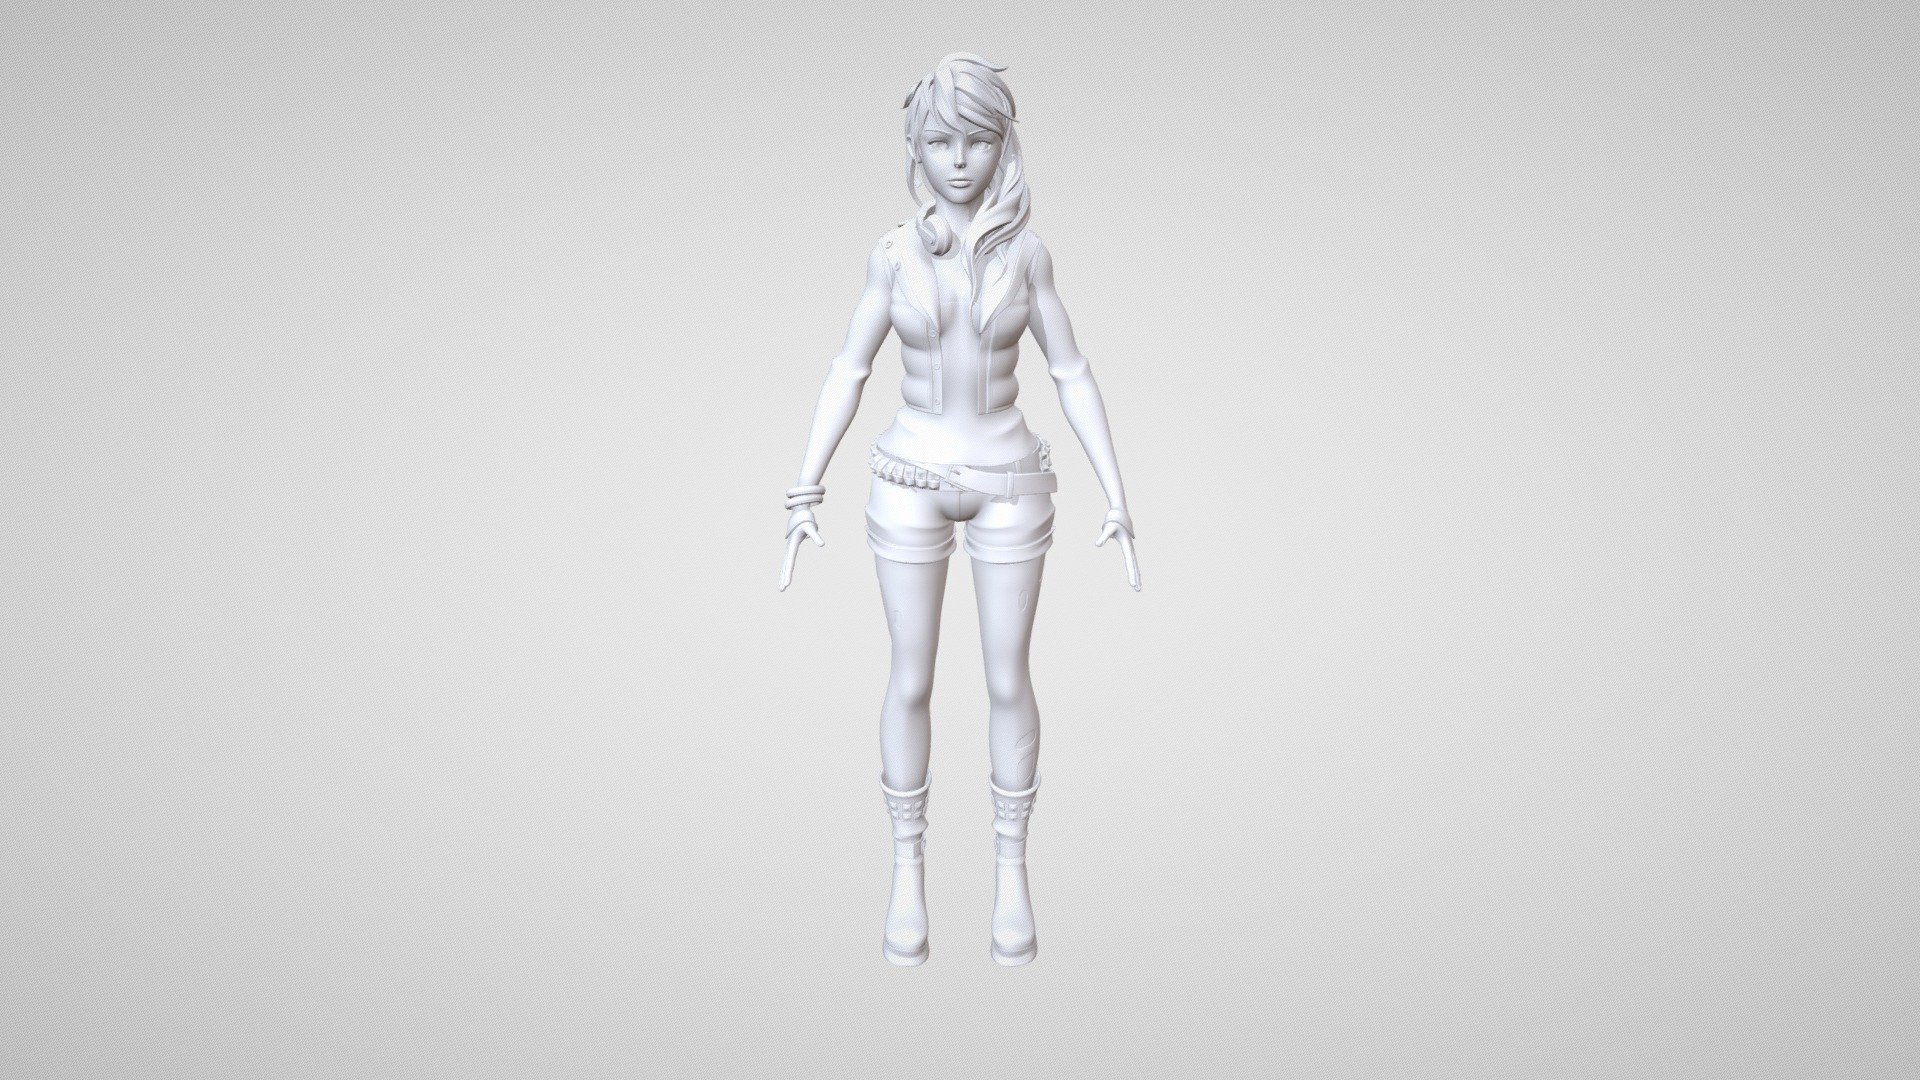 Character model done in Maya
Credits:
Concept Art by Alejandro Tio Gary https://absolum.artstation.com/ - Ellie-The Art Of SleepWalkers Model - 3D model by Valerie (@ValattePalette) 3d model